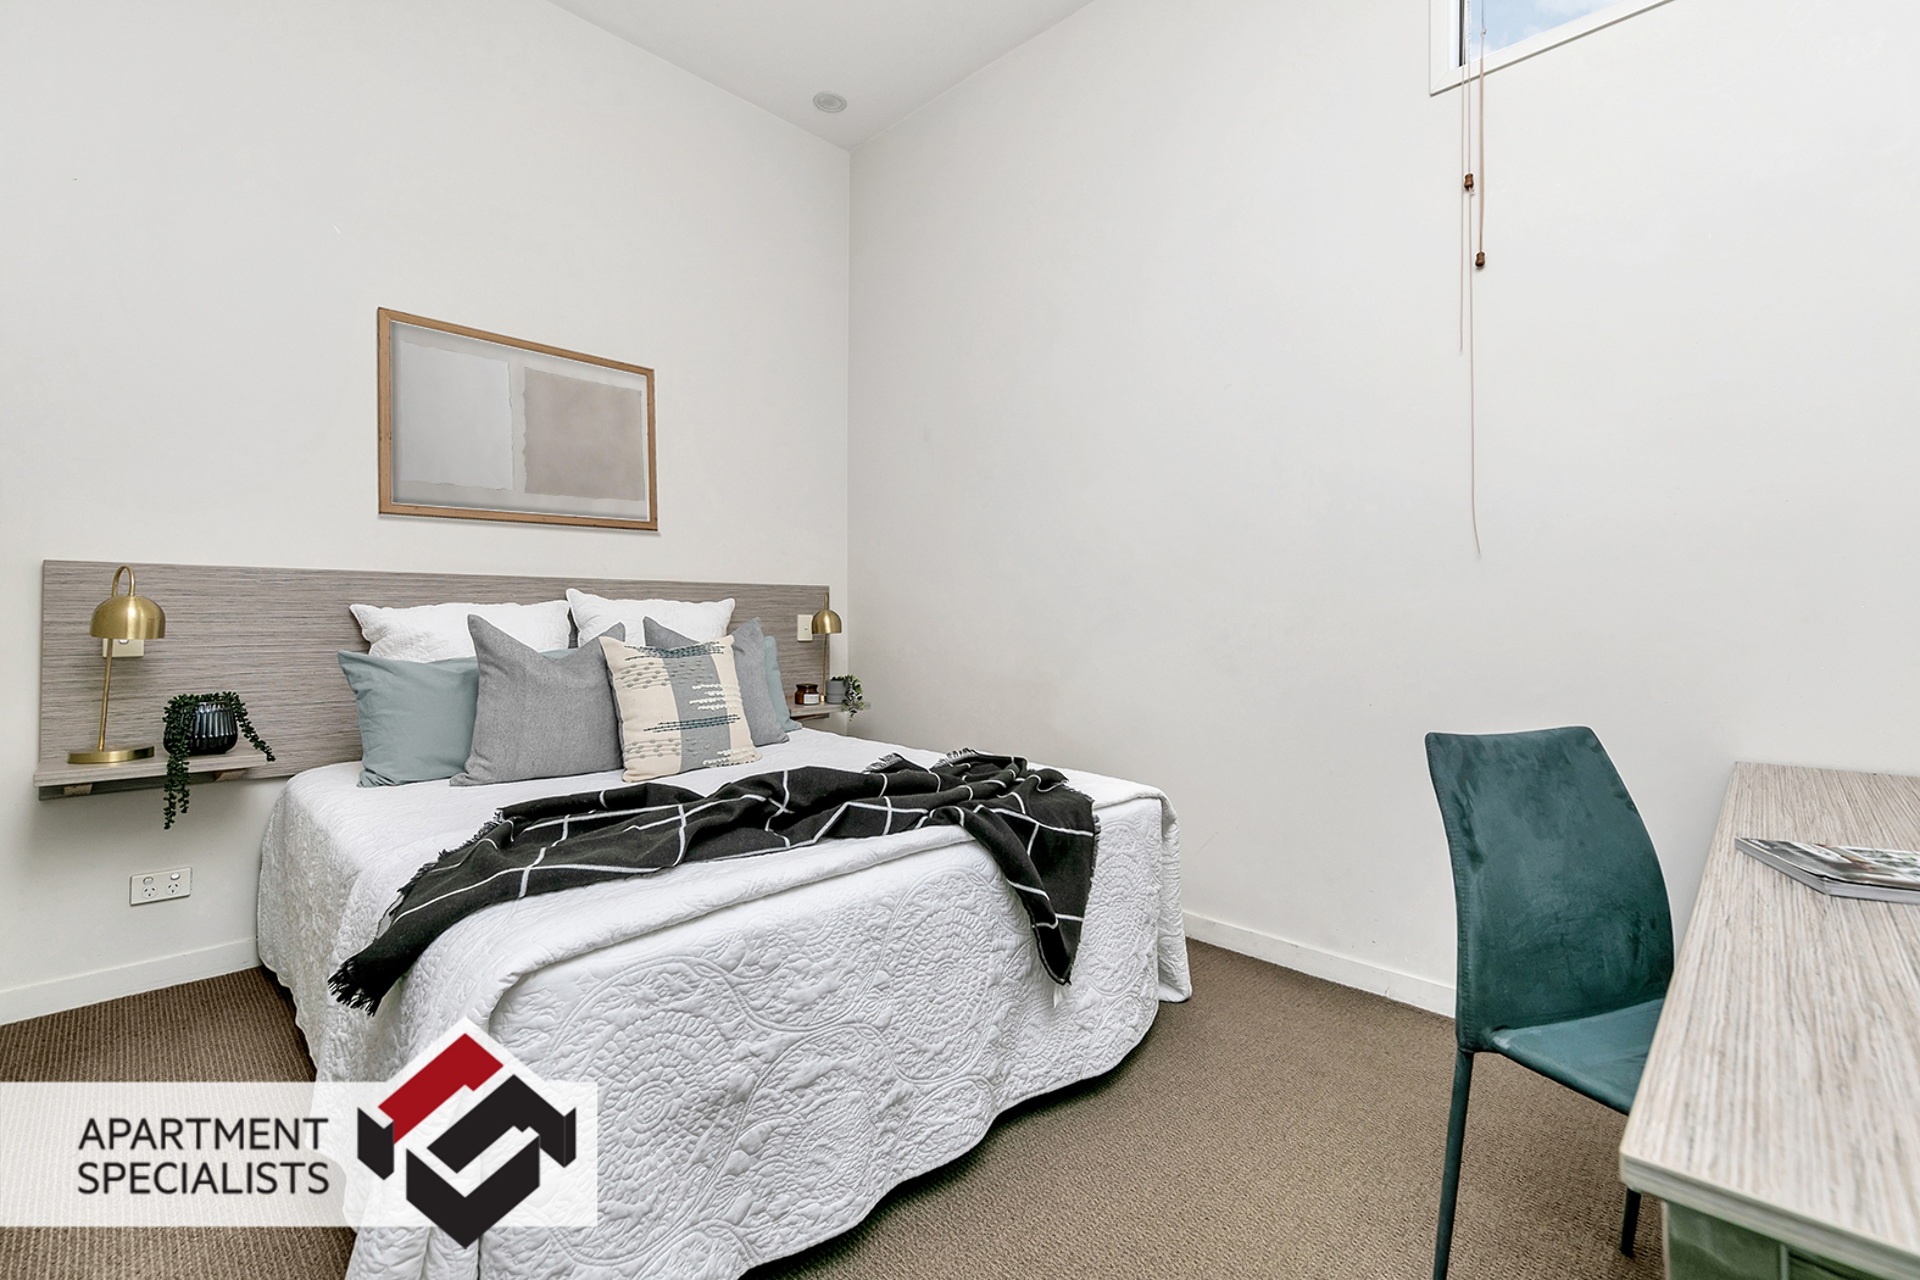 6 | 145 Symonds Street, Eden Terrace | Apartment Specialists